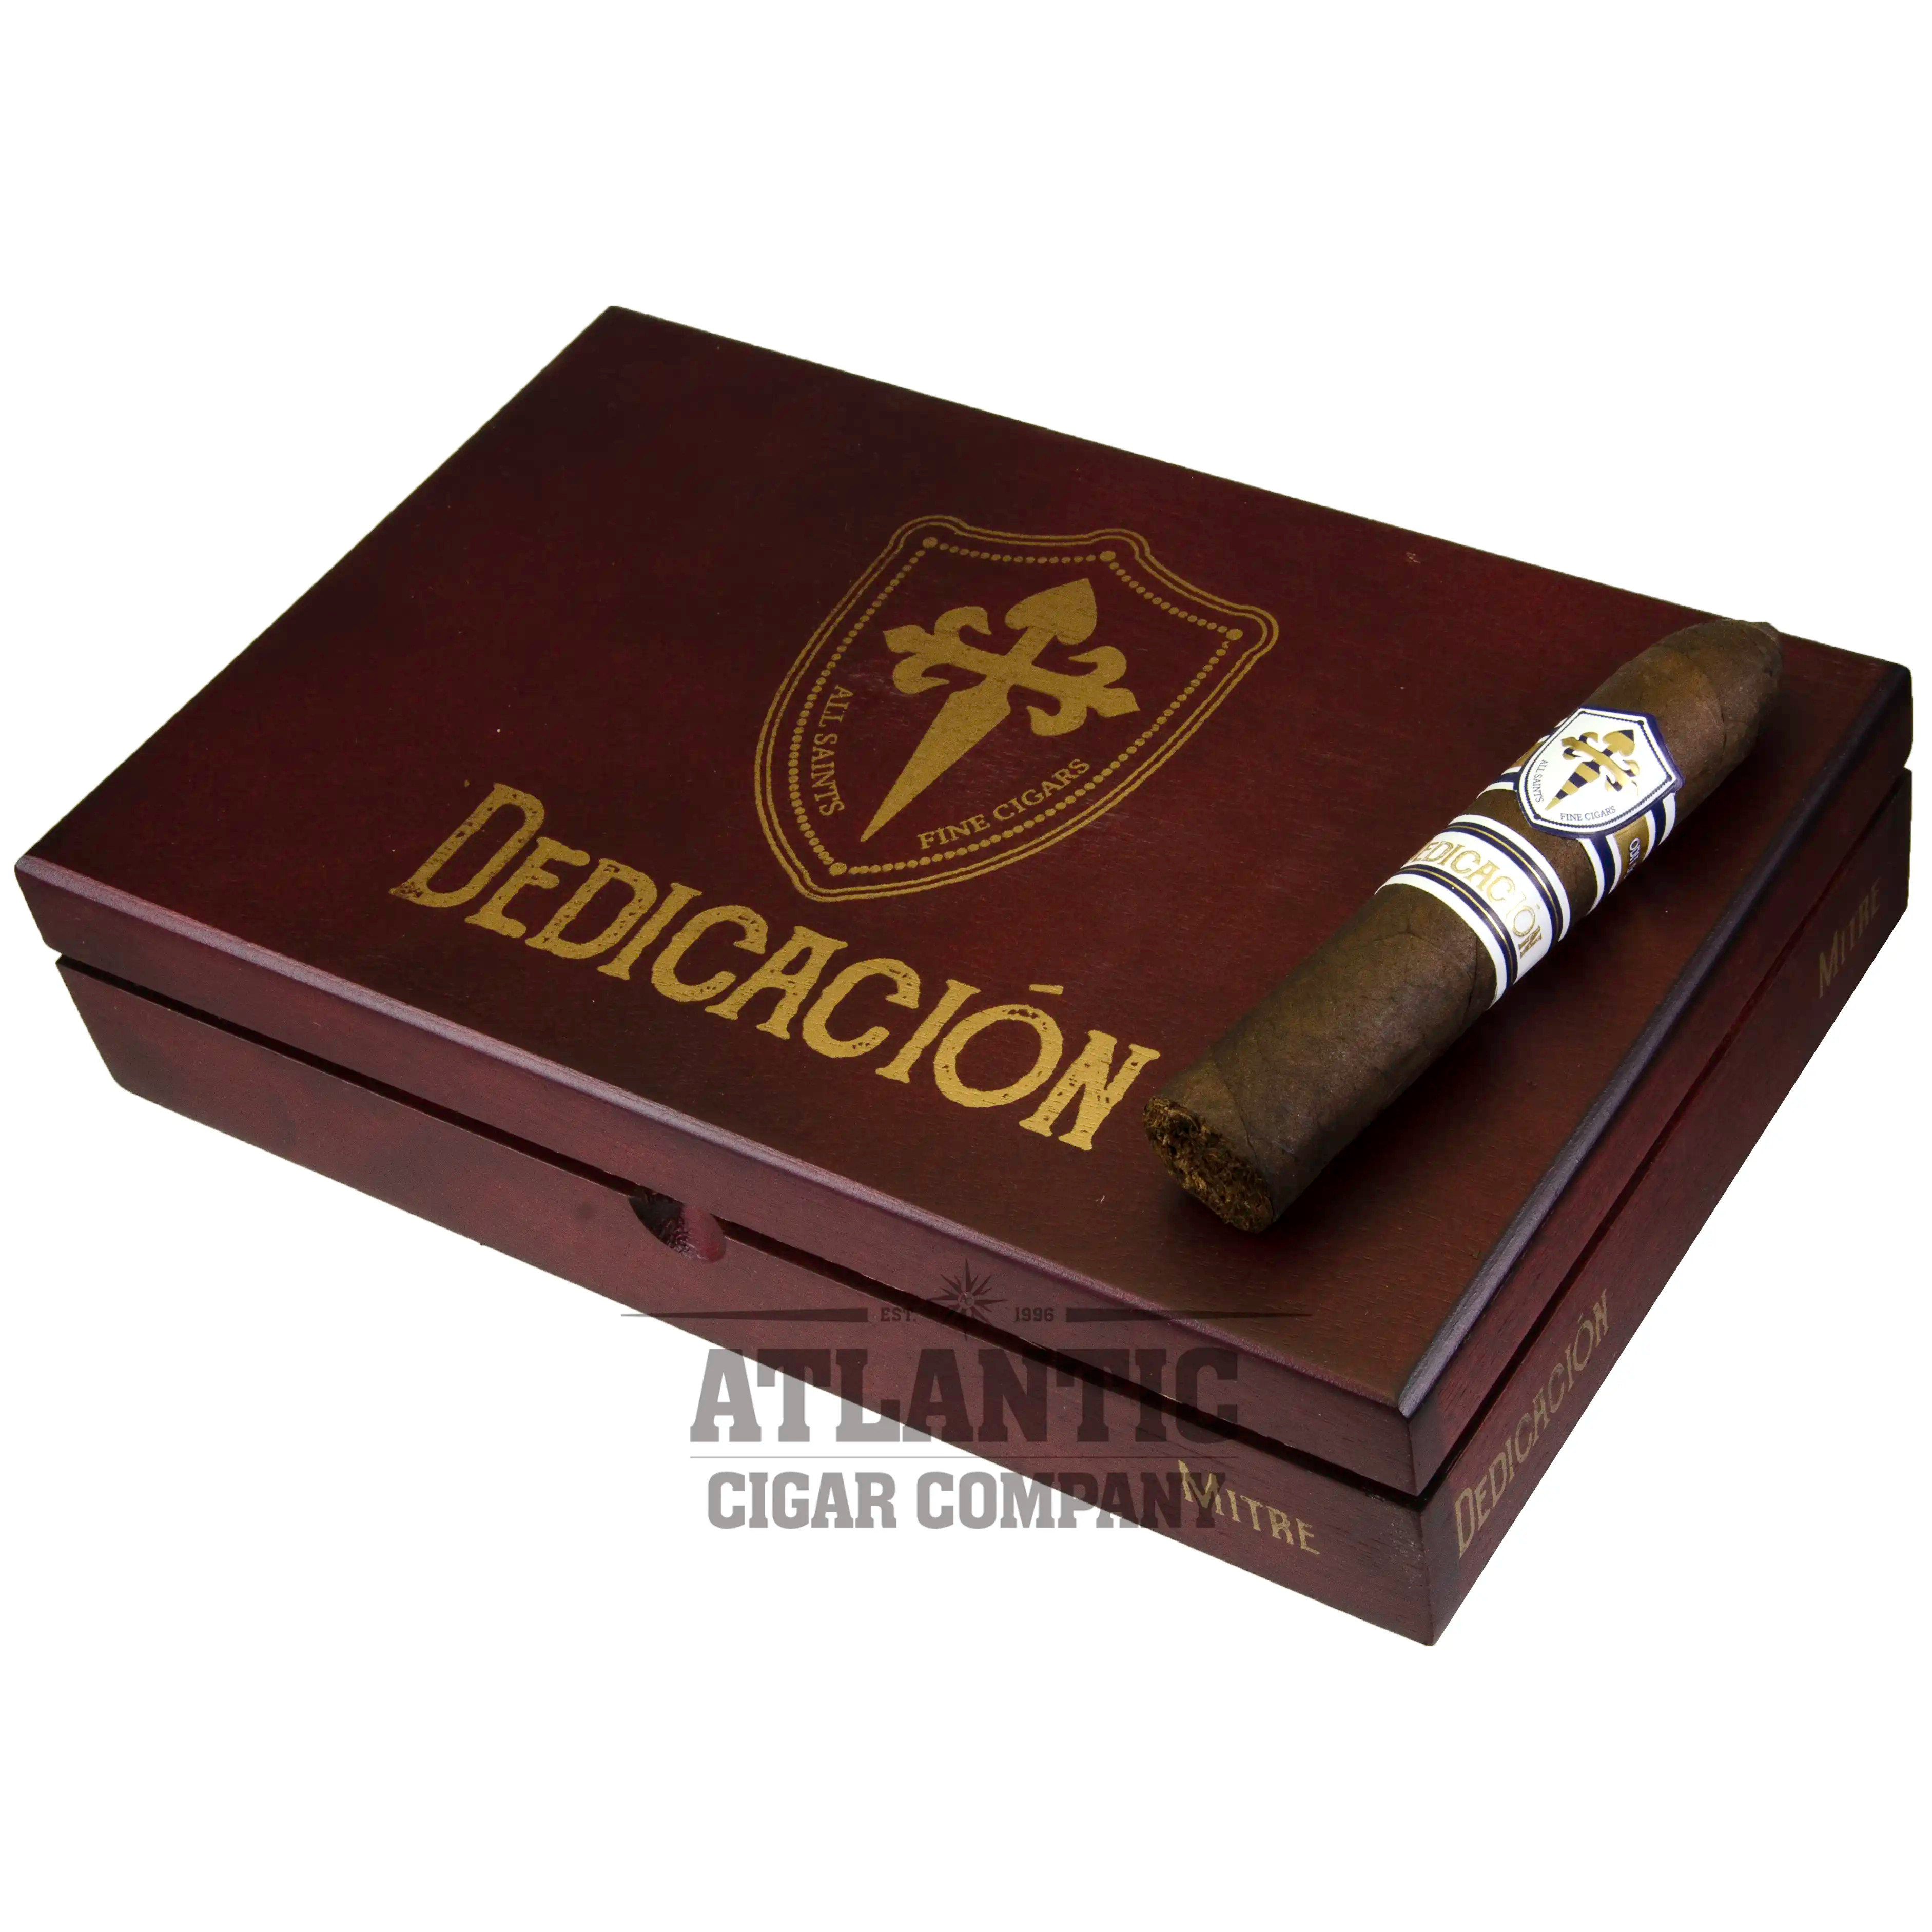 All Saints Dedicacion Cigars Mitre Round (5x54) Torpedo